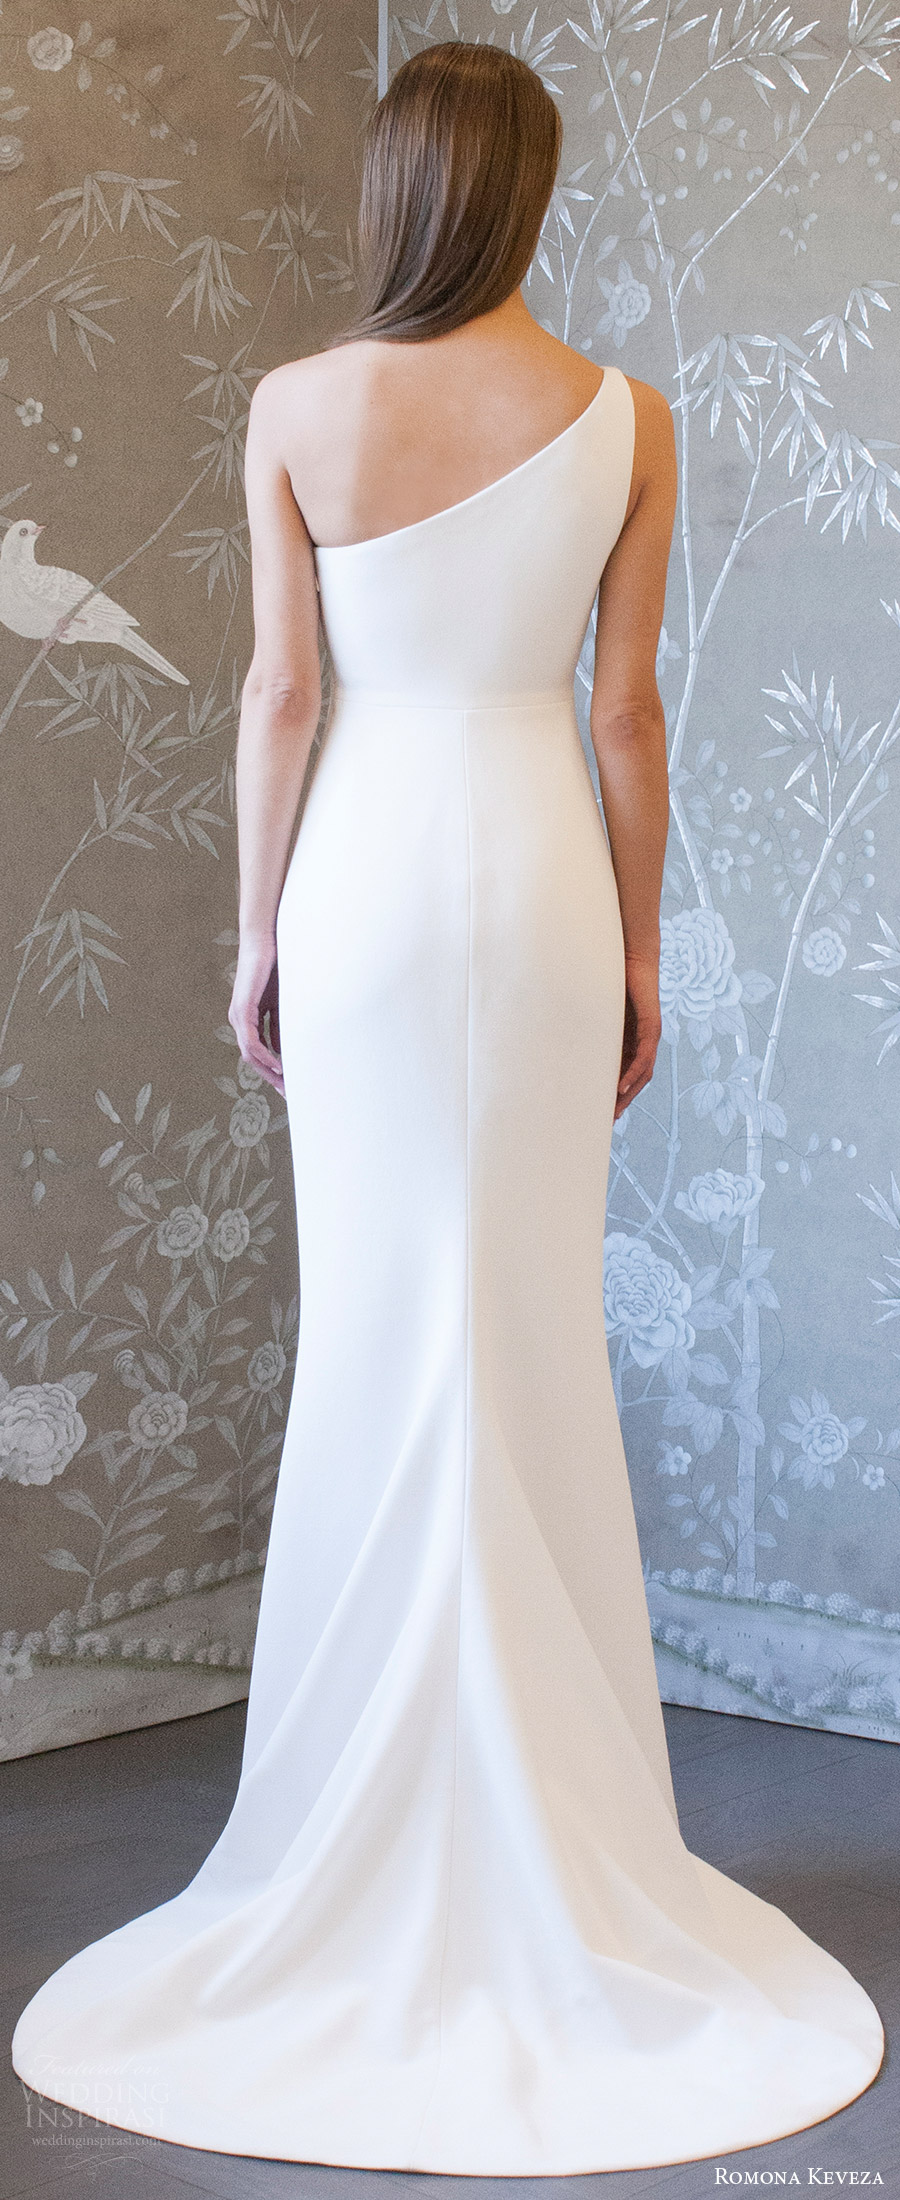 romona keveza spring 2018 bridal one shoulder unembellished sheath wedding dress (rk8401) bv clean modern